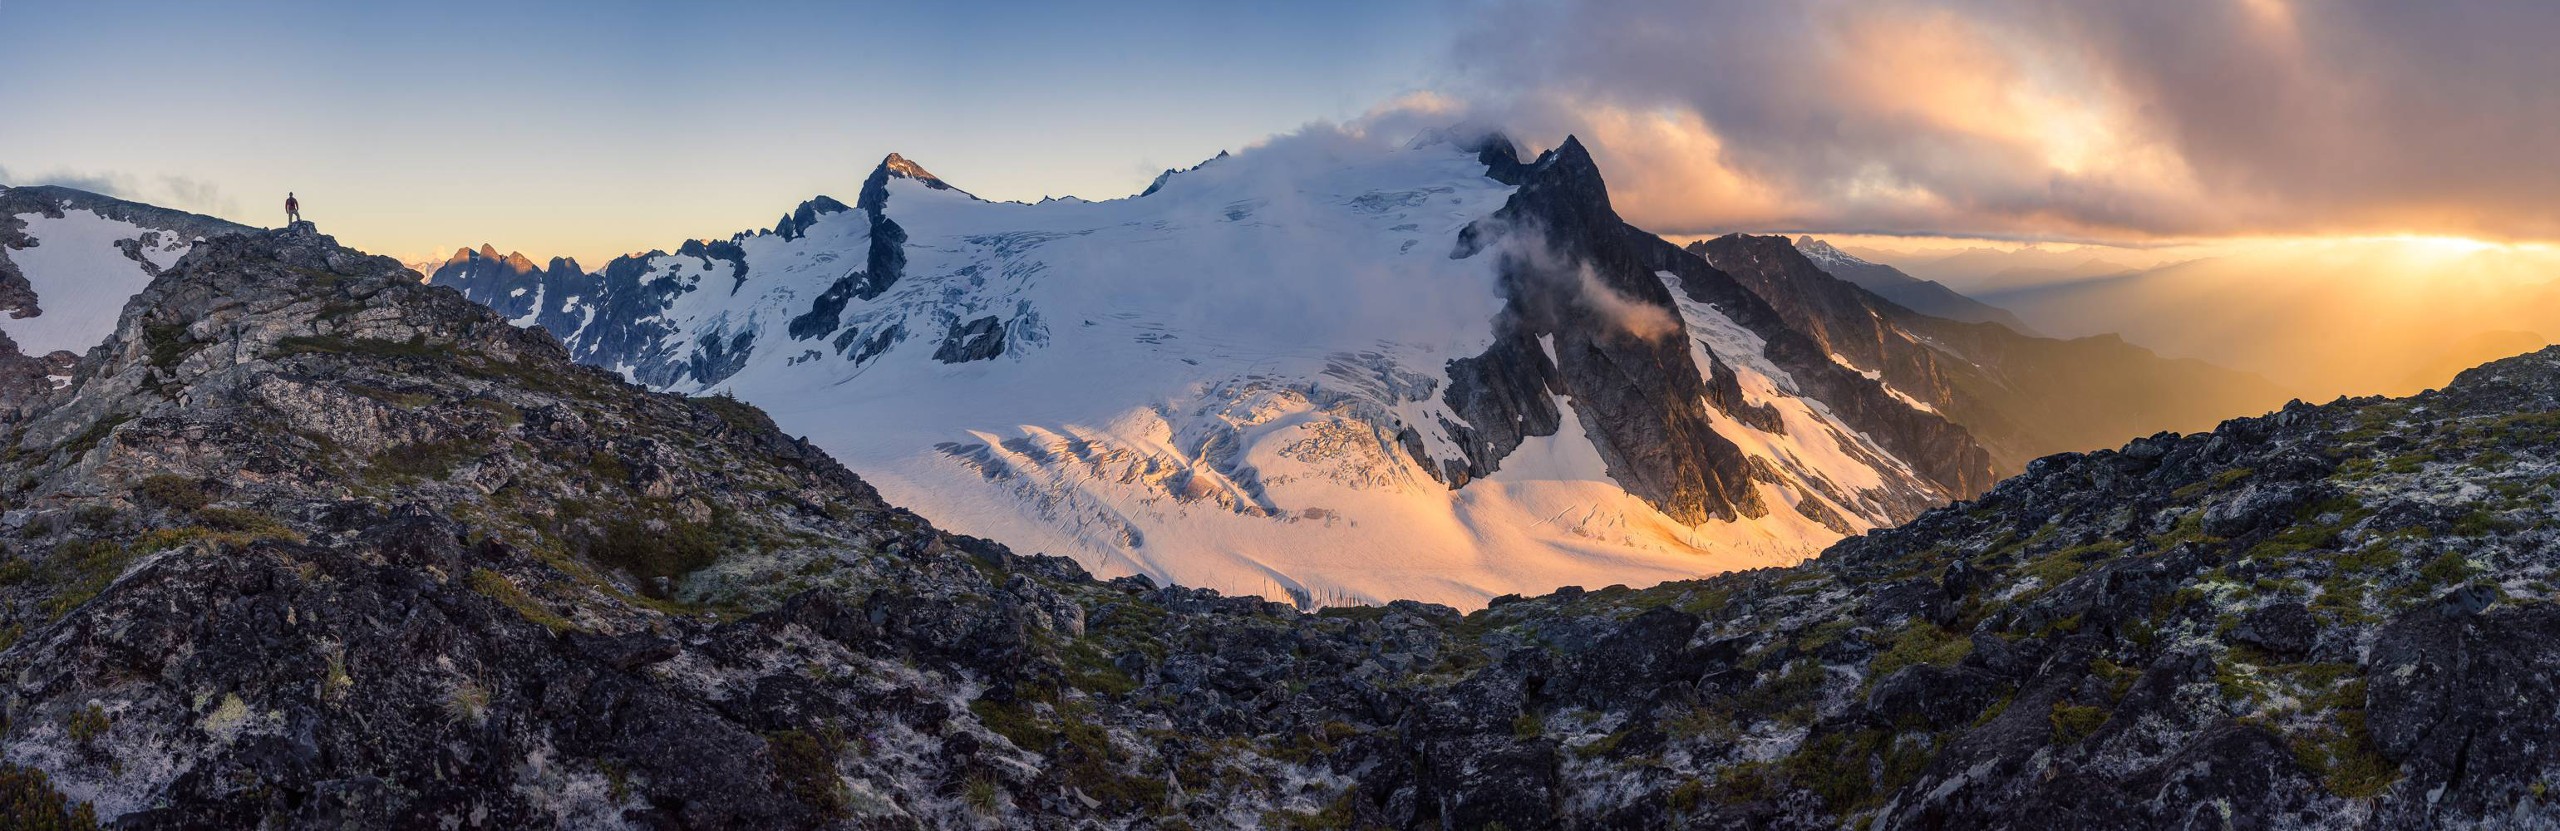 mountains, Snow, Washington state, National park, Glaciers, Clouds, Mist, Dusk Wallpaper